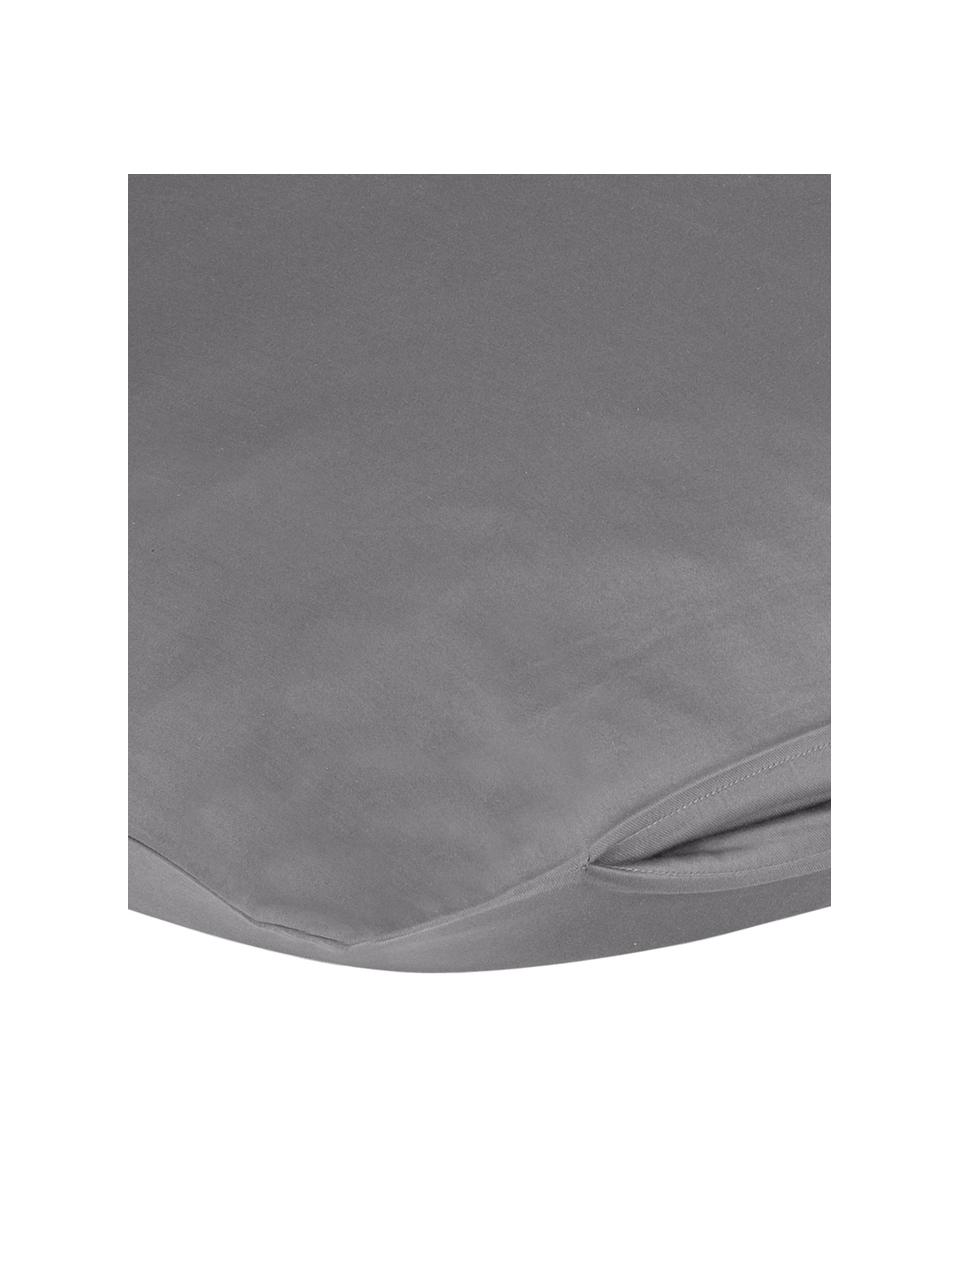 Baumwollsatin-Kissenbezug Comfort in Dunkelgrau, 65 x 65 cm, Webart: Satin, leicht glänzend Fa, Dunkelgrau, B 65 x L 65 cm